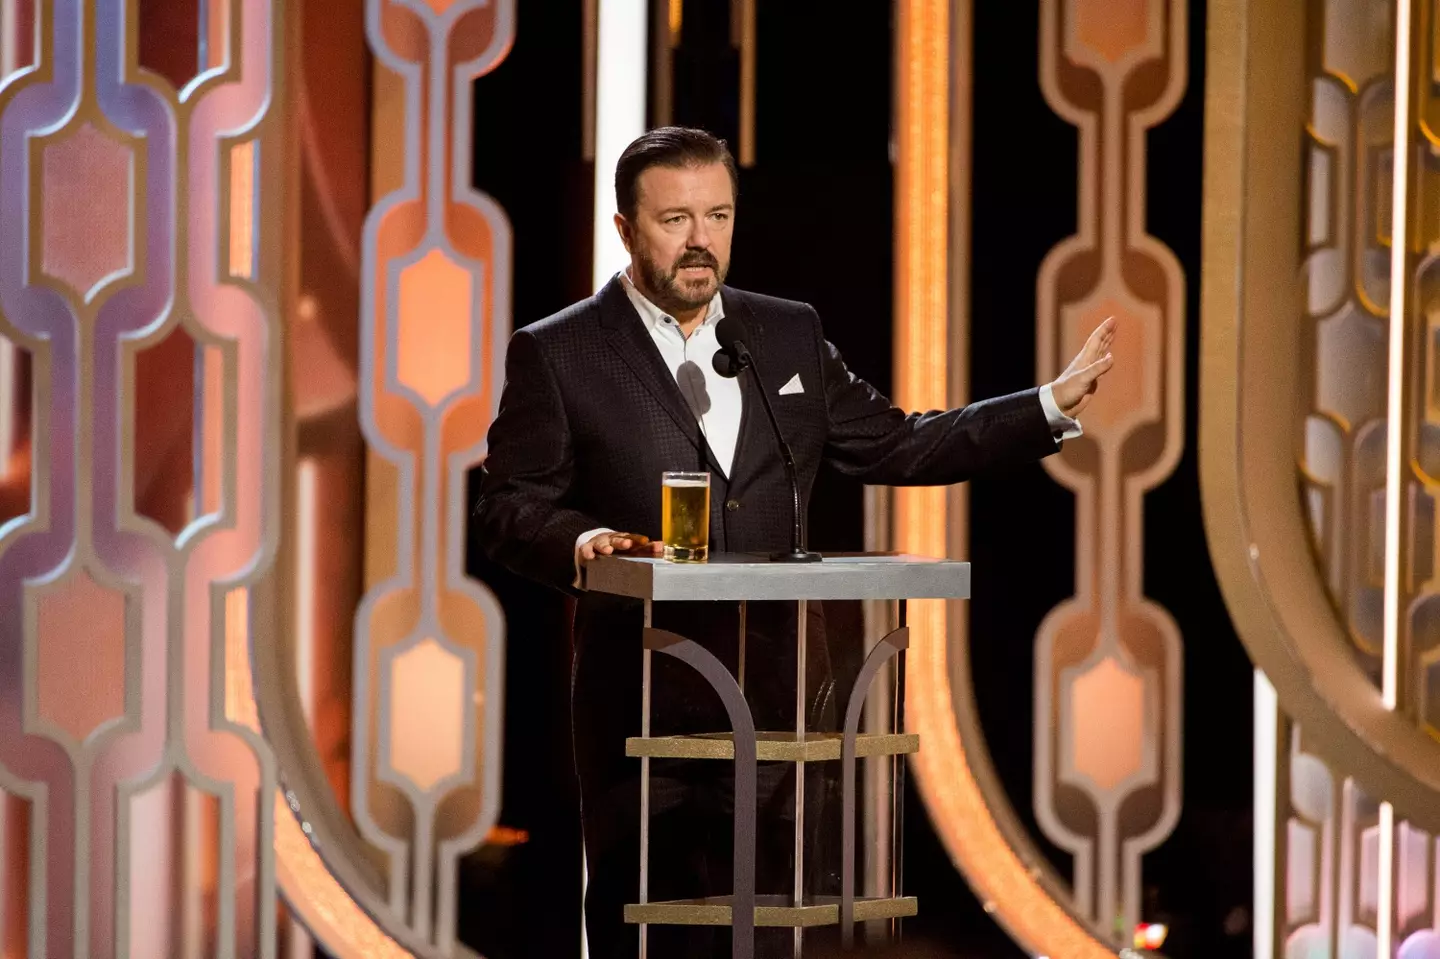 Ricky Gervais has hosted 5 Golden Globe award ceremonies.